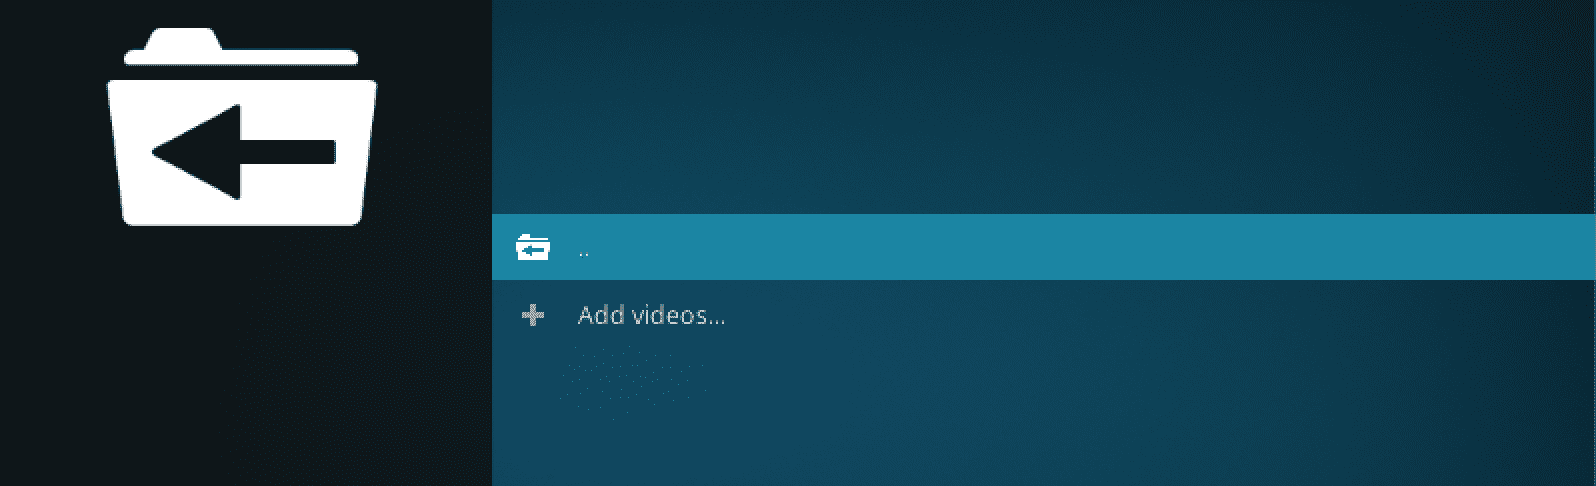 add videos